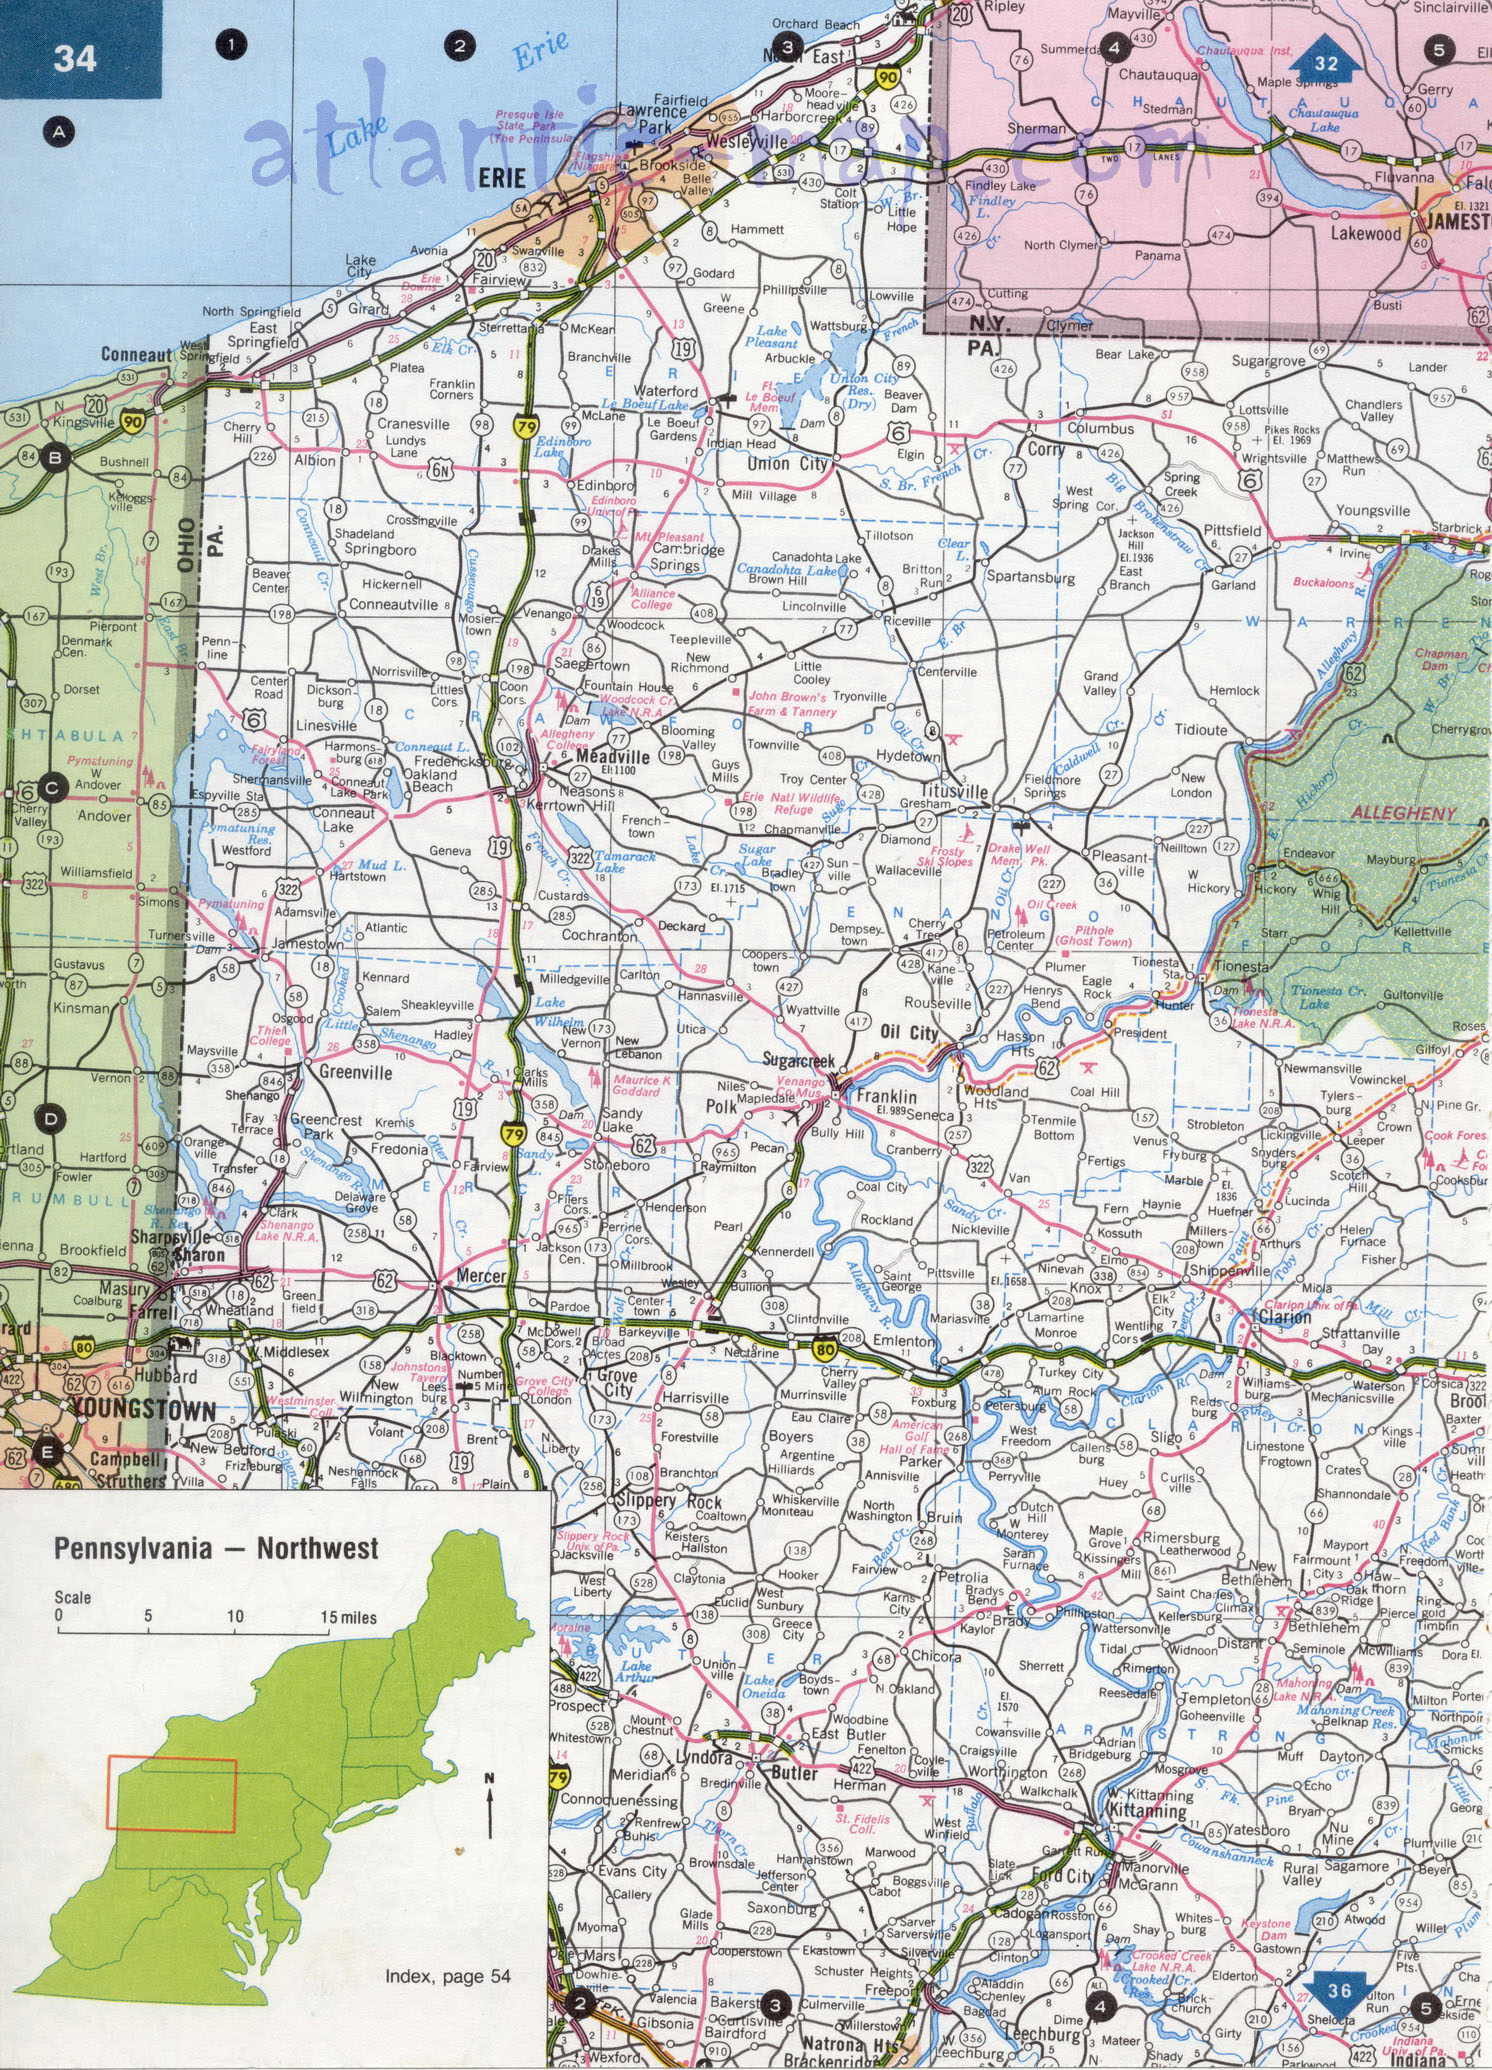 Northwest Pennsylvania state map